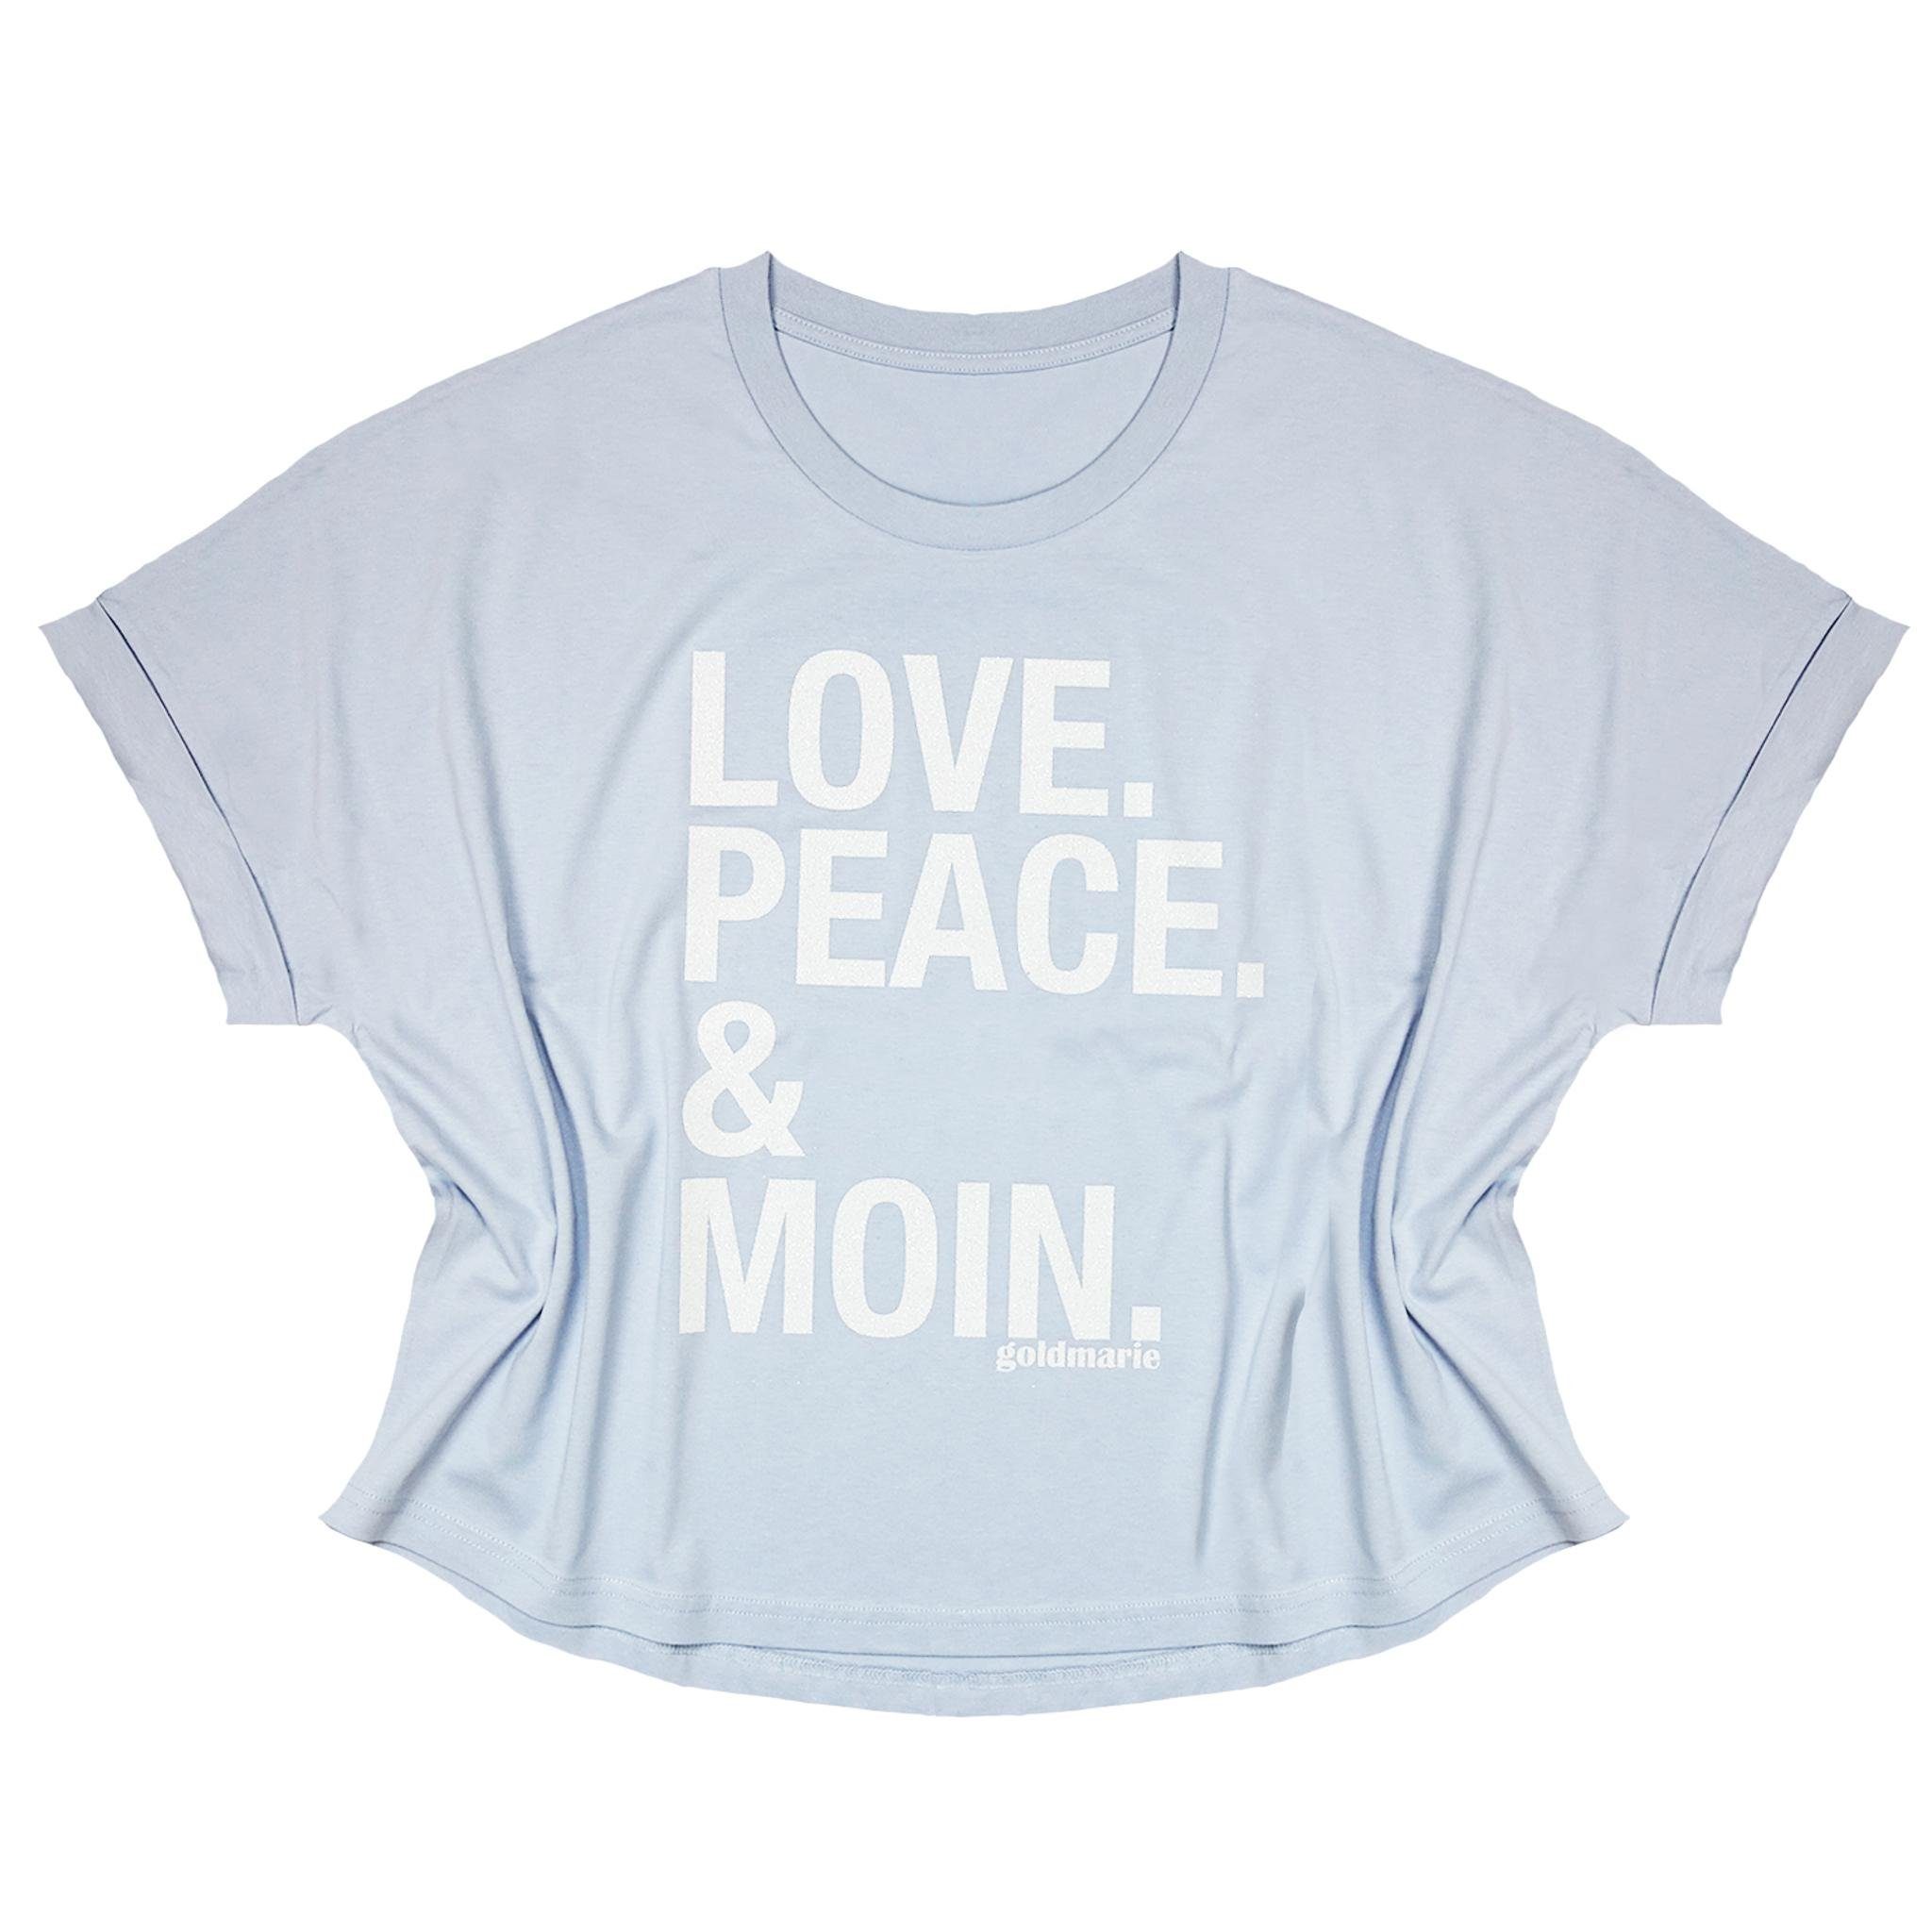 Uschi T-Shirt Baumwolle Shirt goldmarie Glitzer eisblau mit PEACE MOIN LOVE